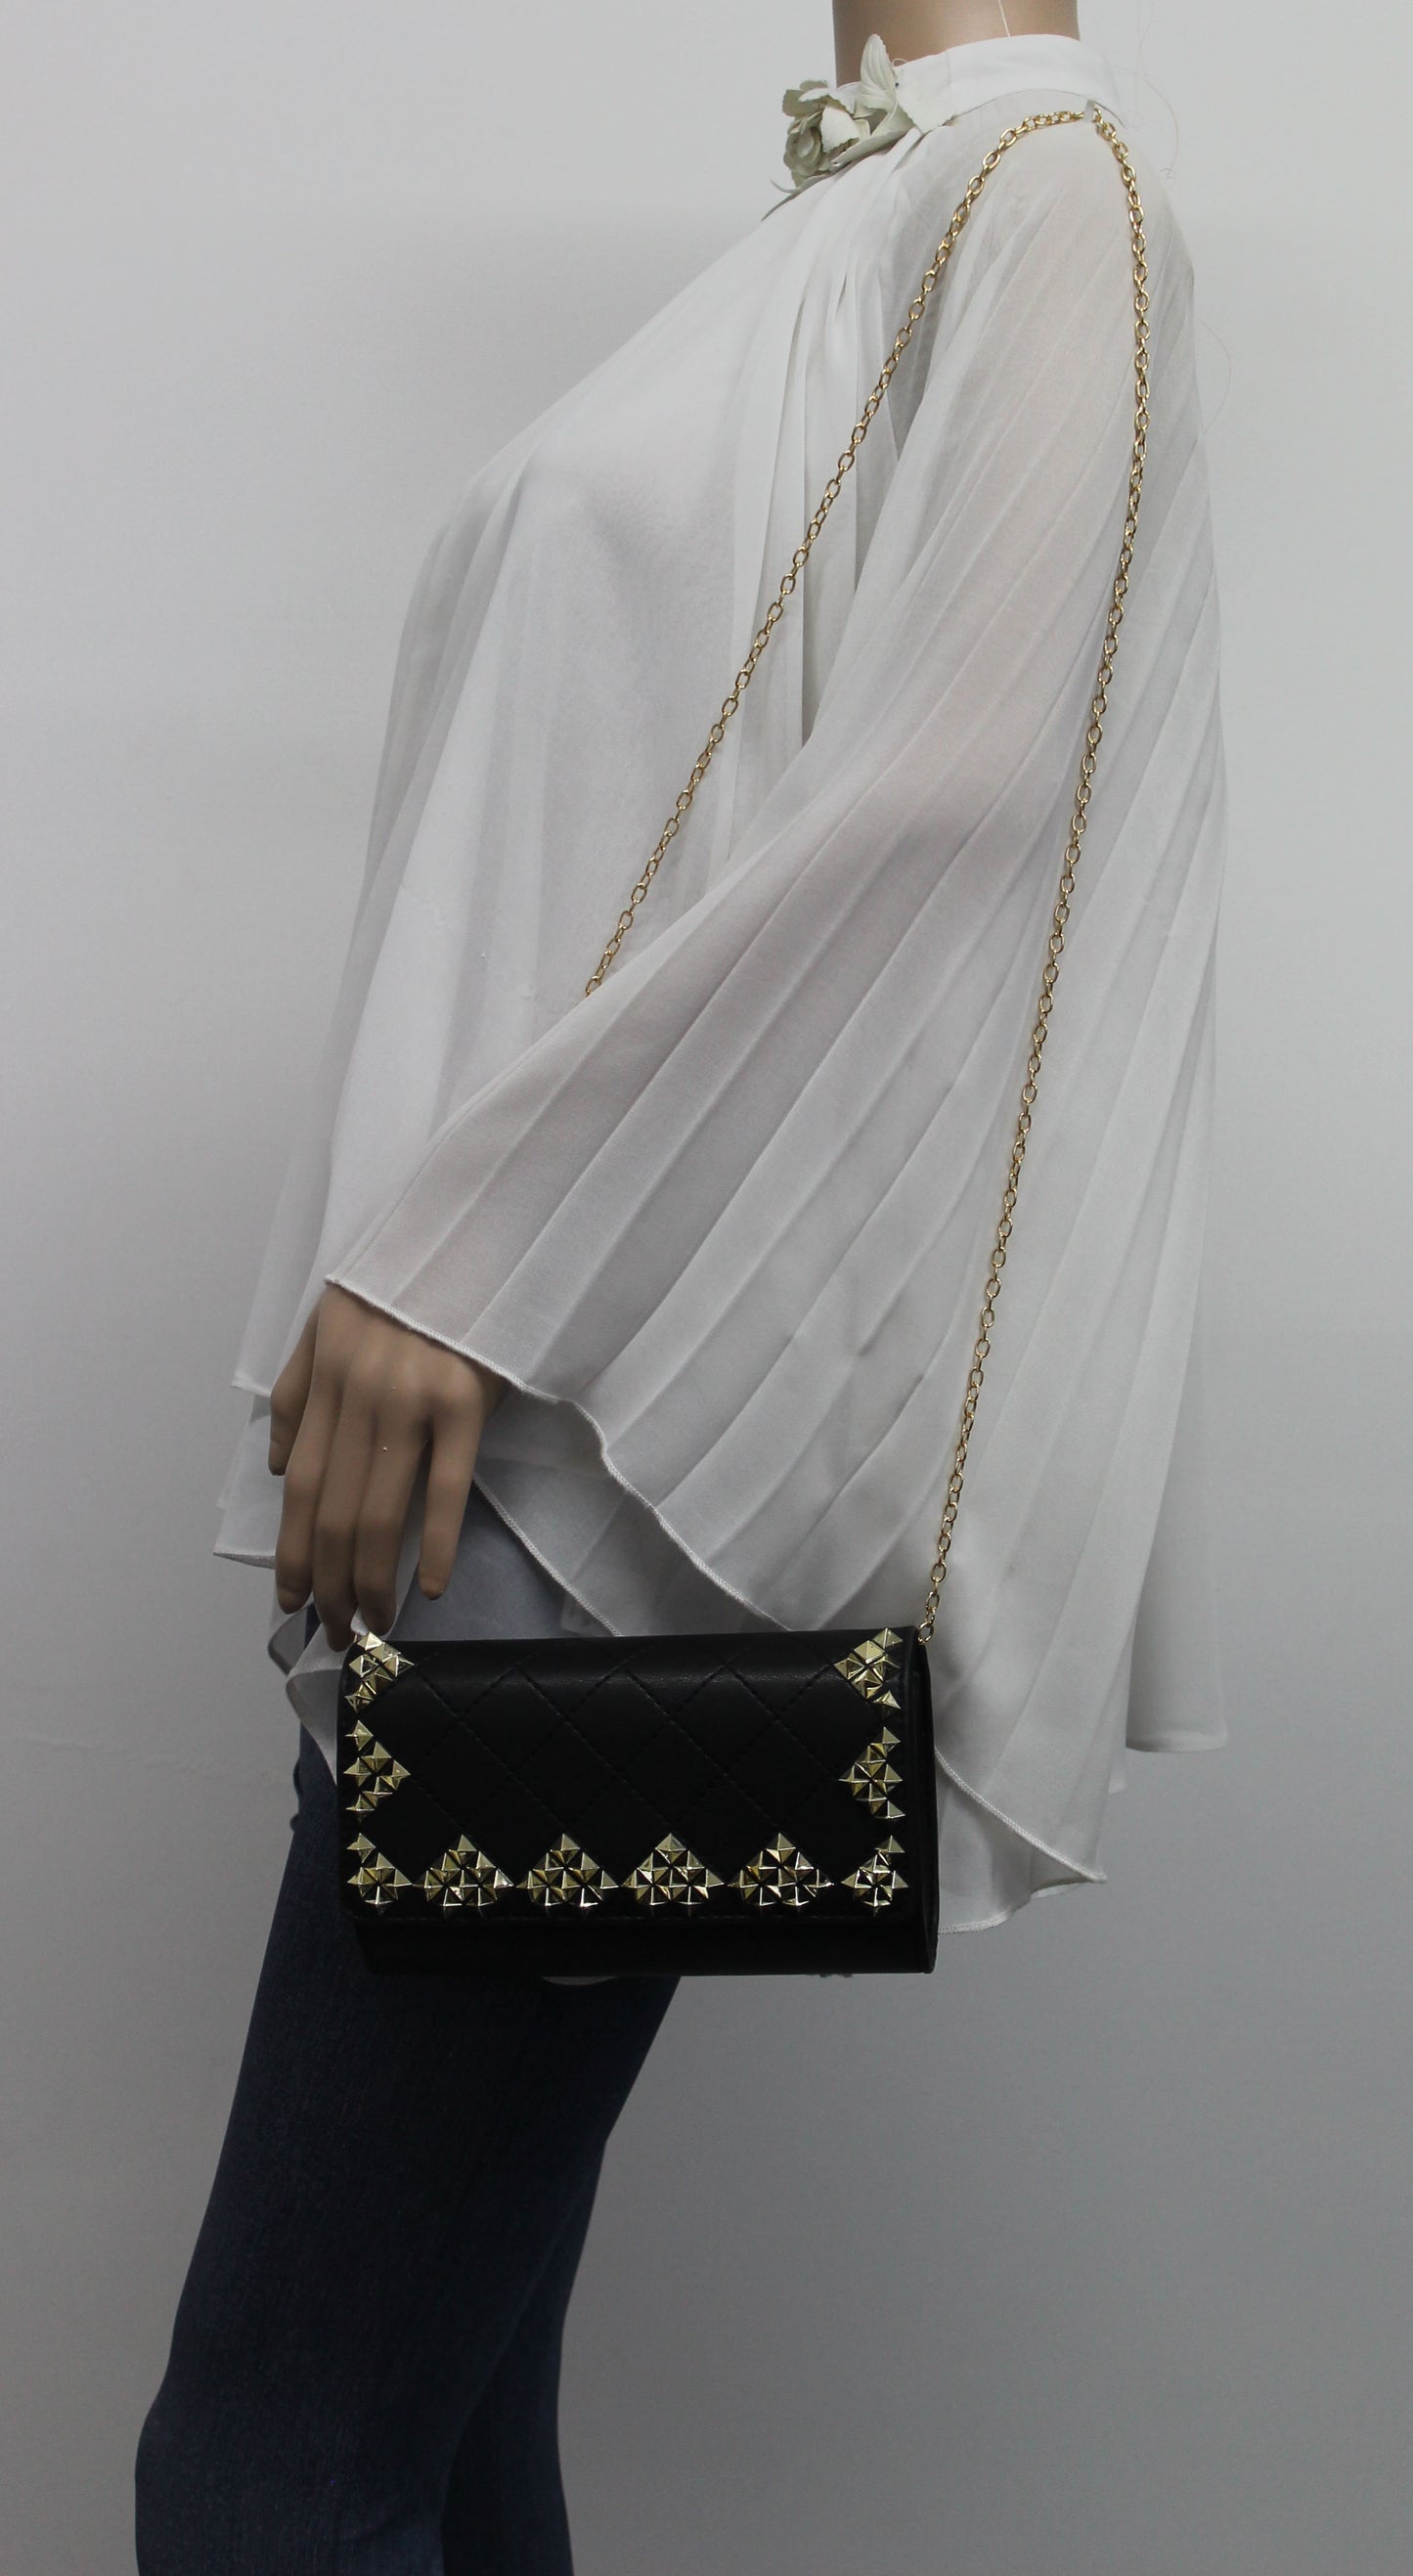 SWANKYSWANS Brittany Diamond Pattern Stud Clutch Bag Black Cute Cheap Clutch Bag For Weddings School and Work